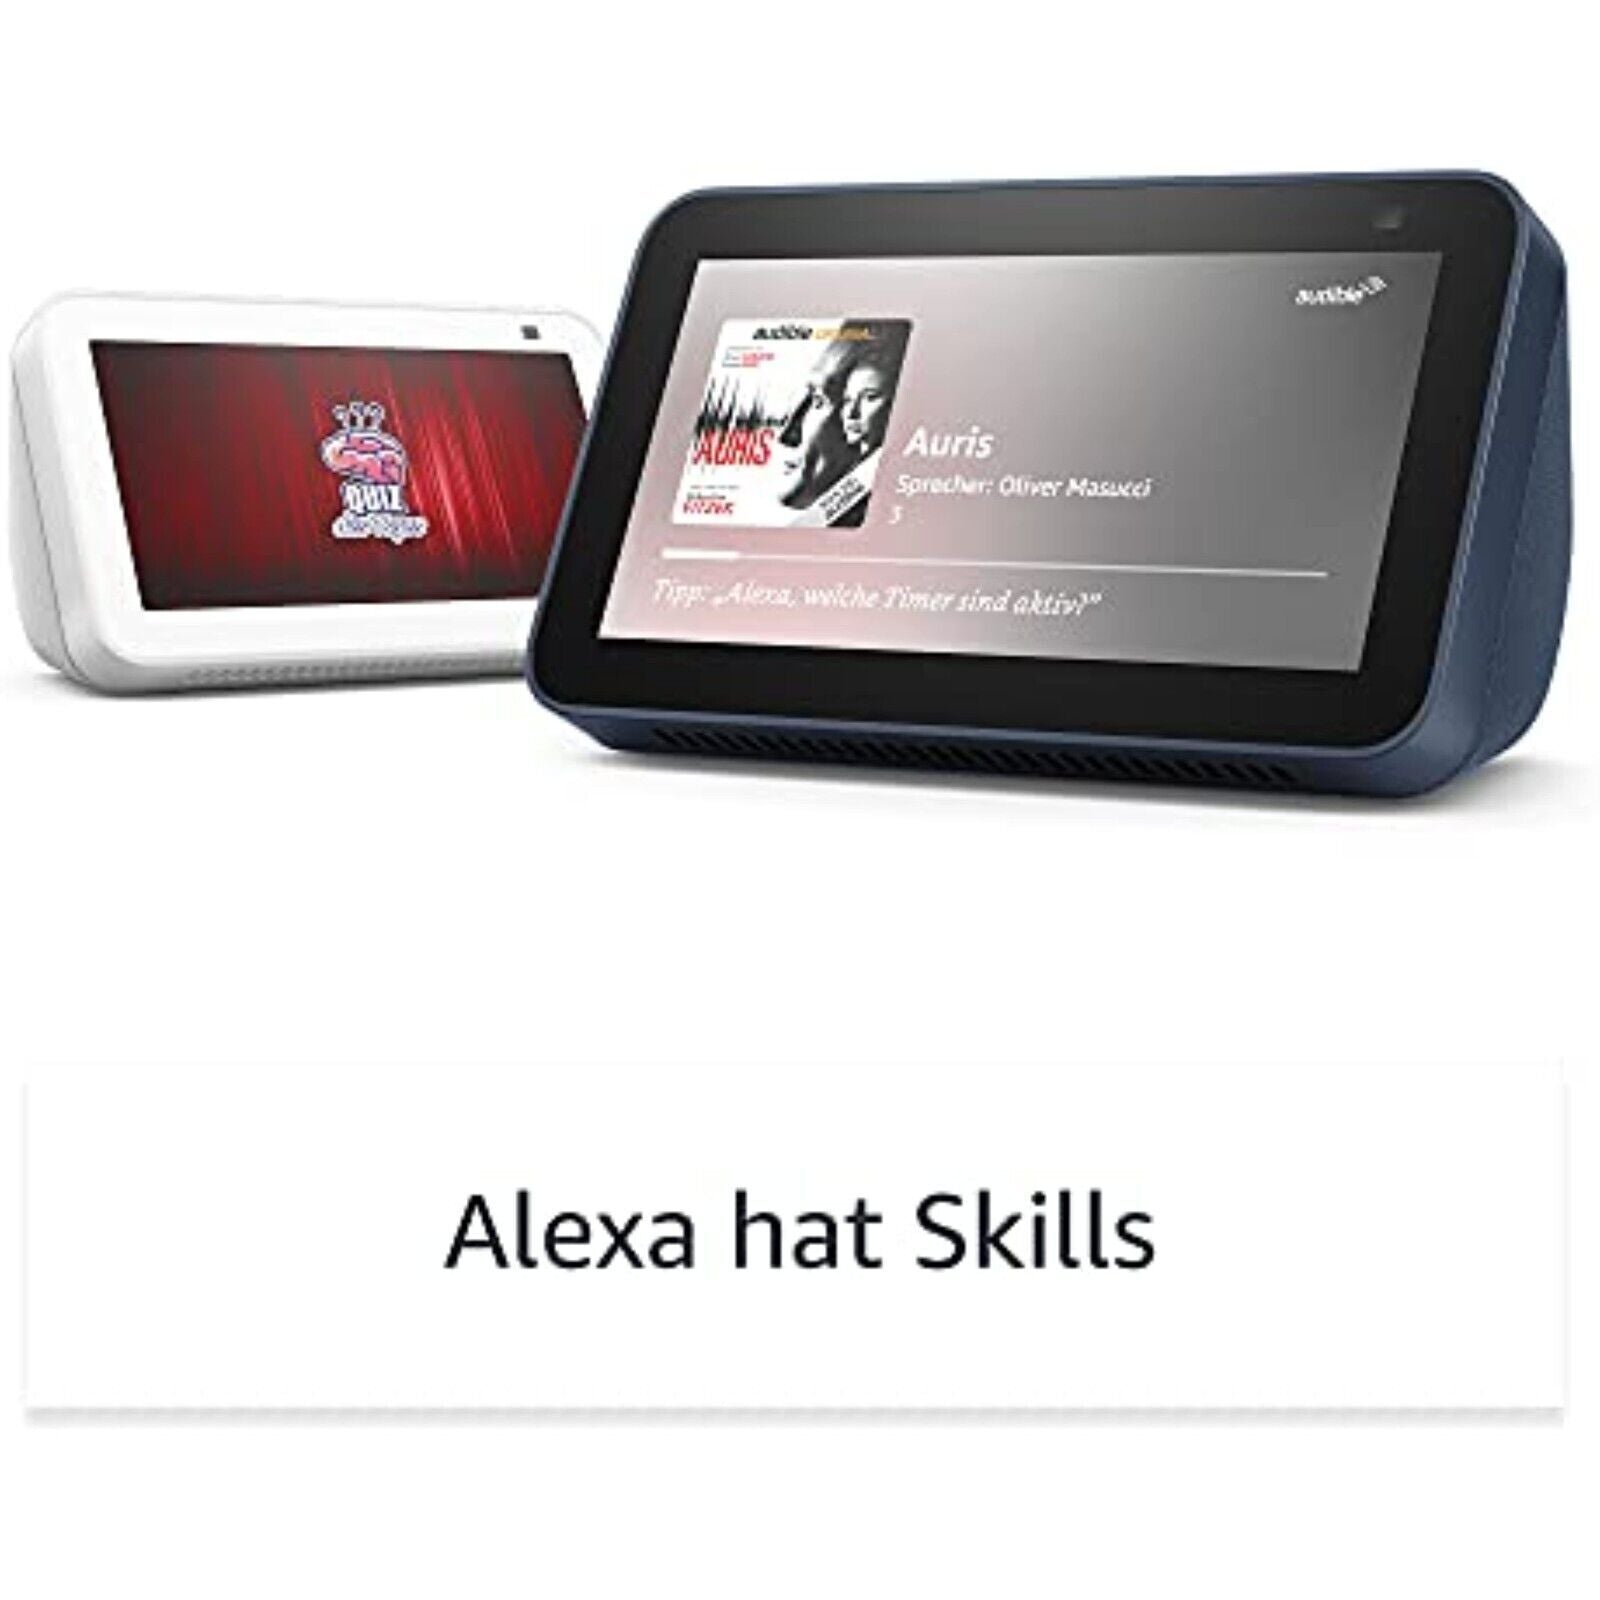 Amazon Echo Show 5 (2. Gen) Smart Display Lautsprecher -mit Alexa Anthrazit/Blau